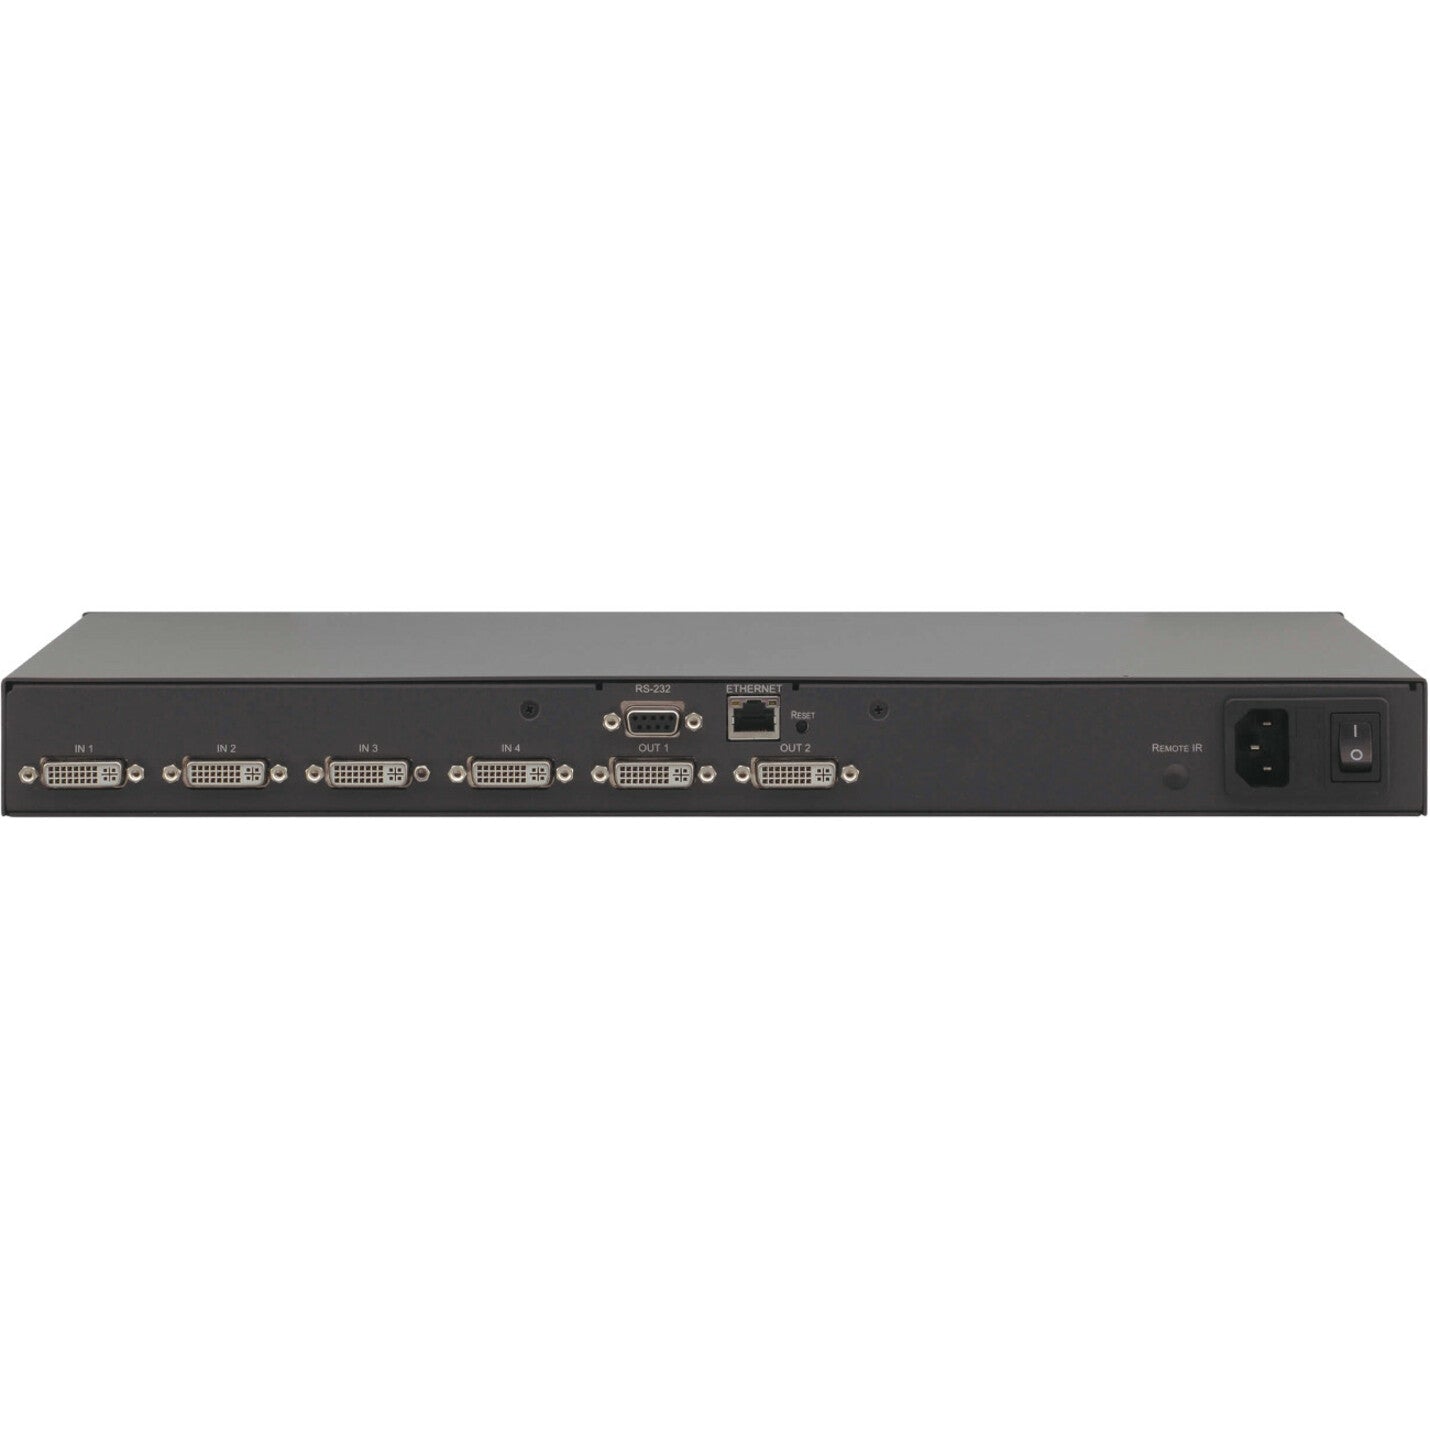 Kramer 4x2 HDCP Compliant DVI Matrix Switcher